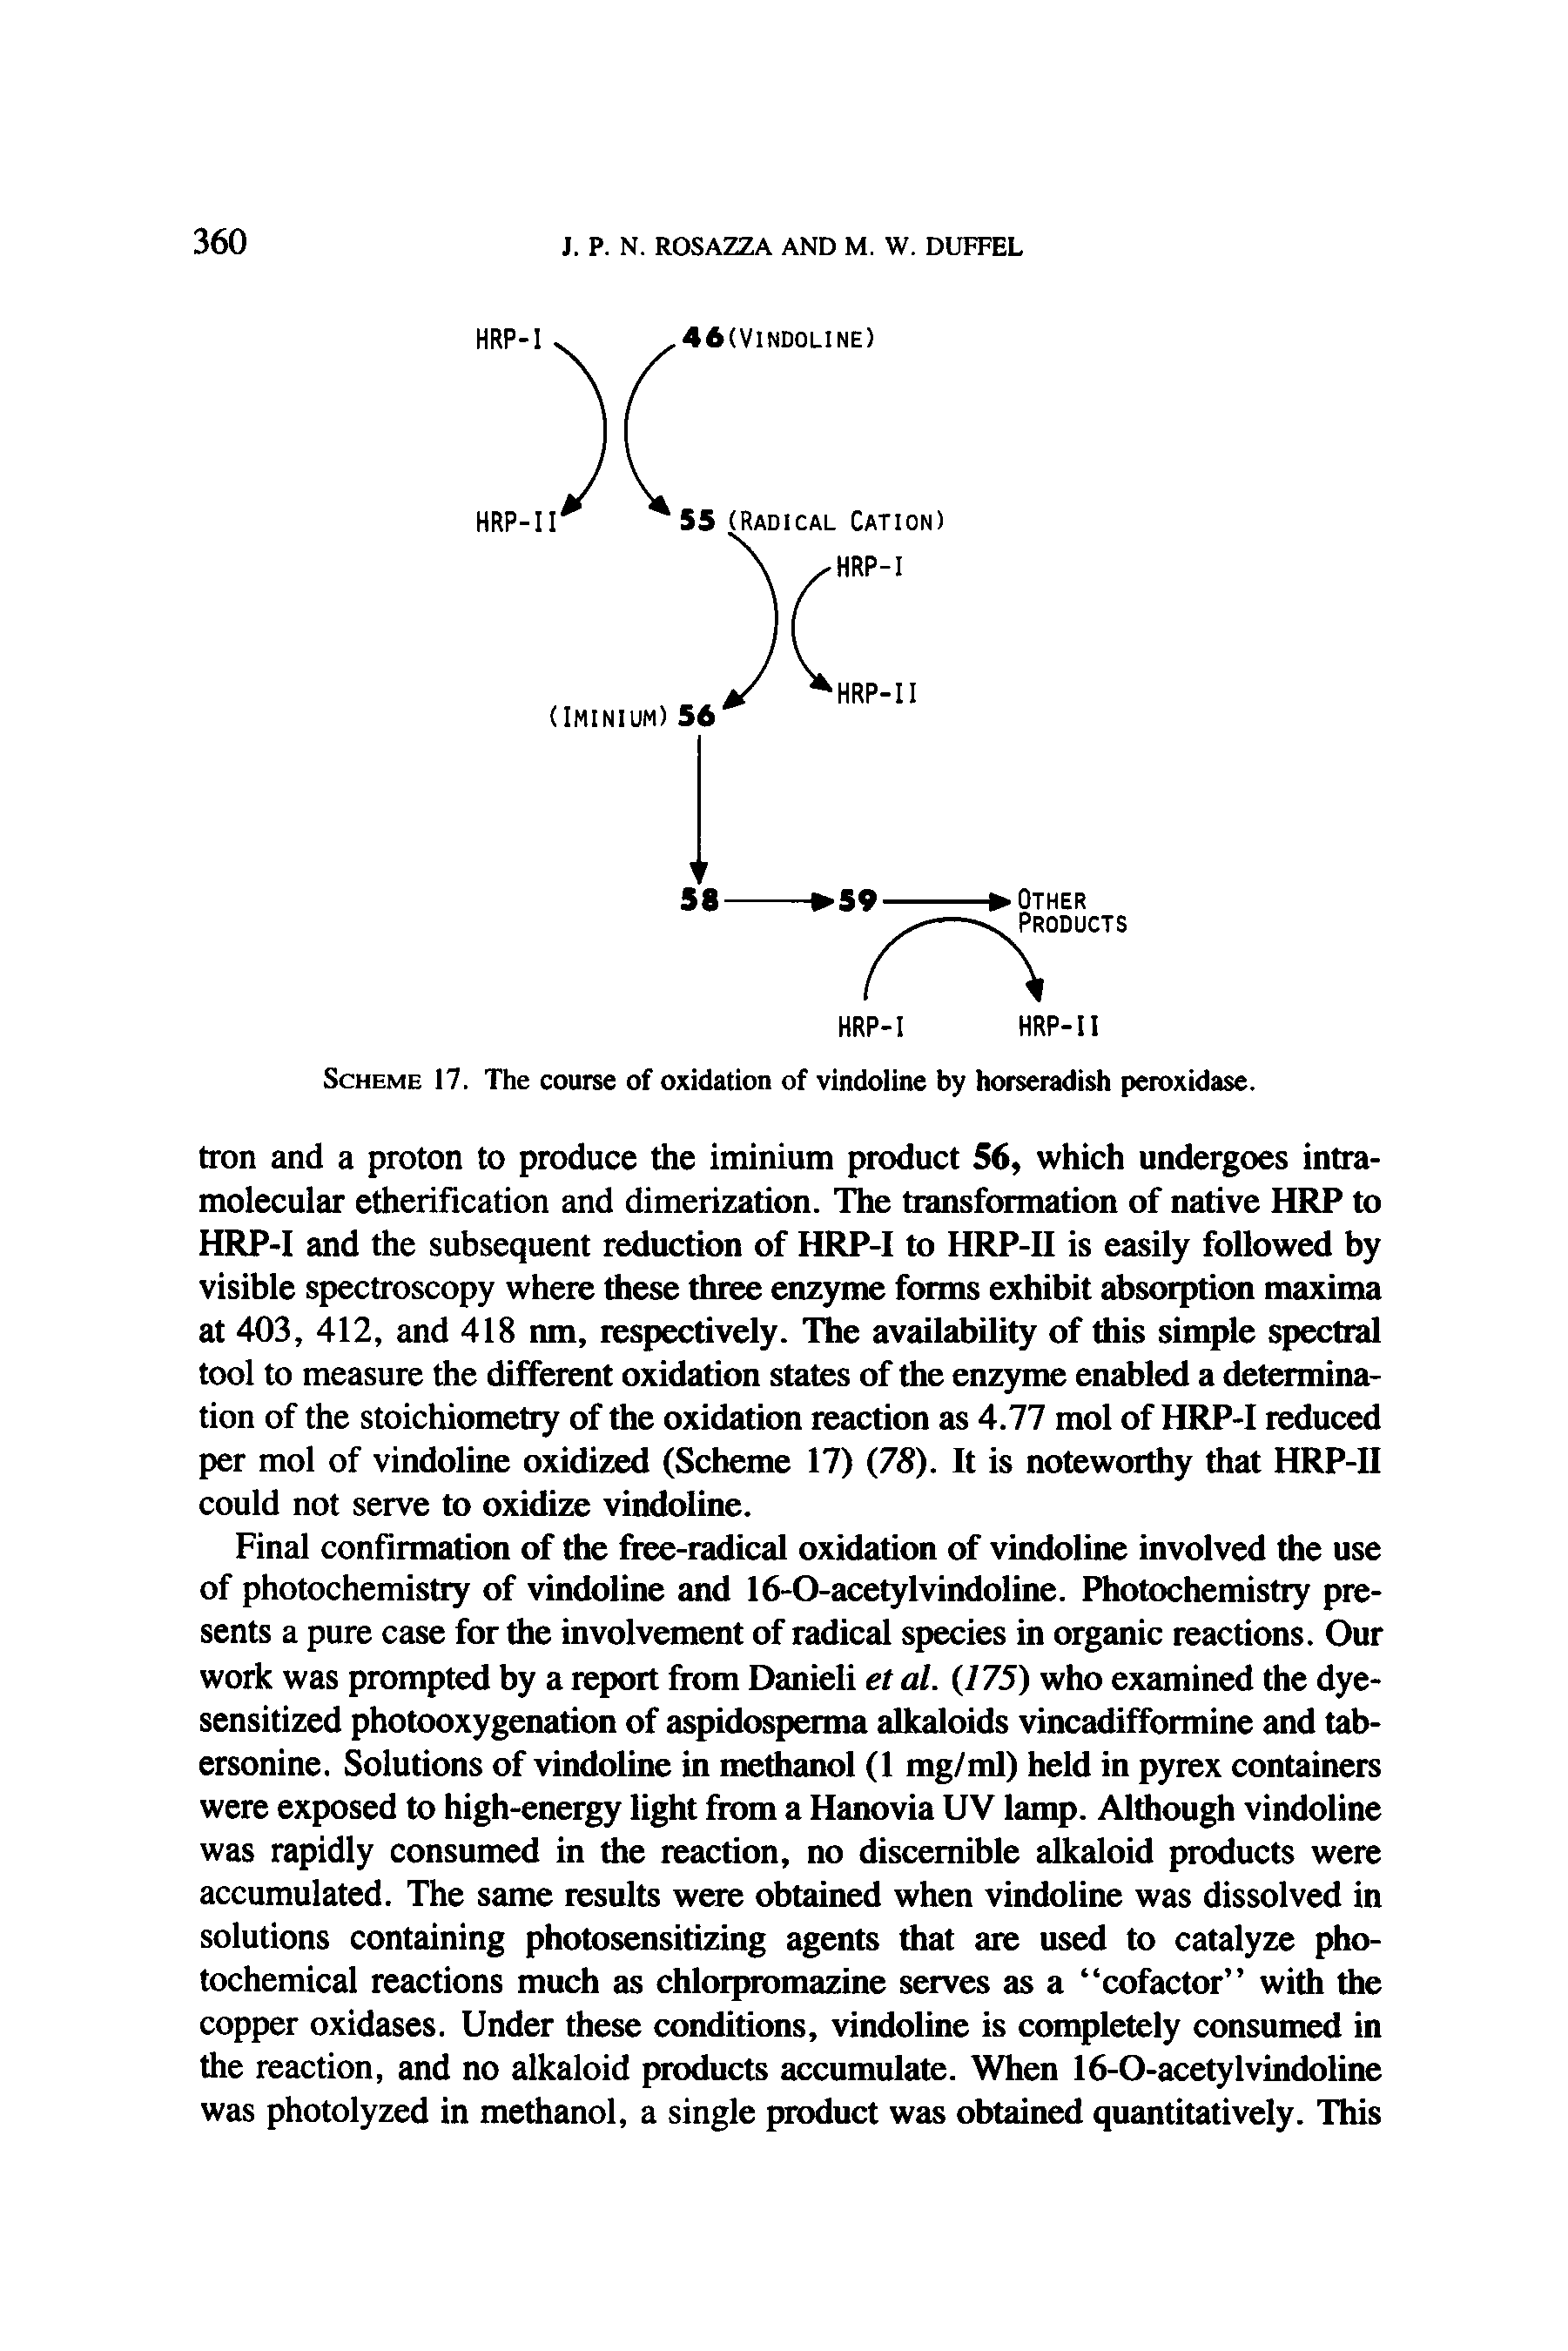 Scheme 17. The course of oxidation of vindoline by horseradish peroxidase.